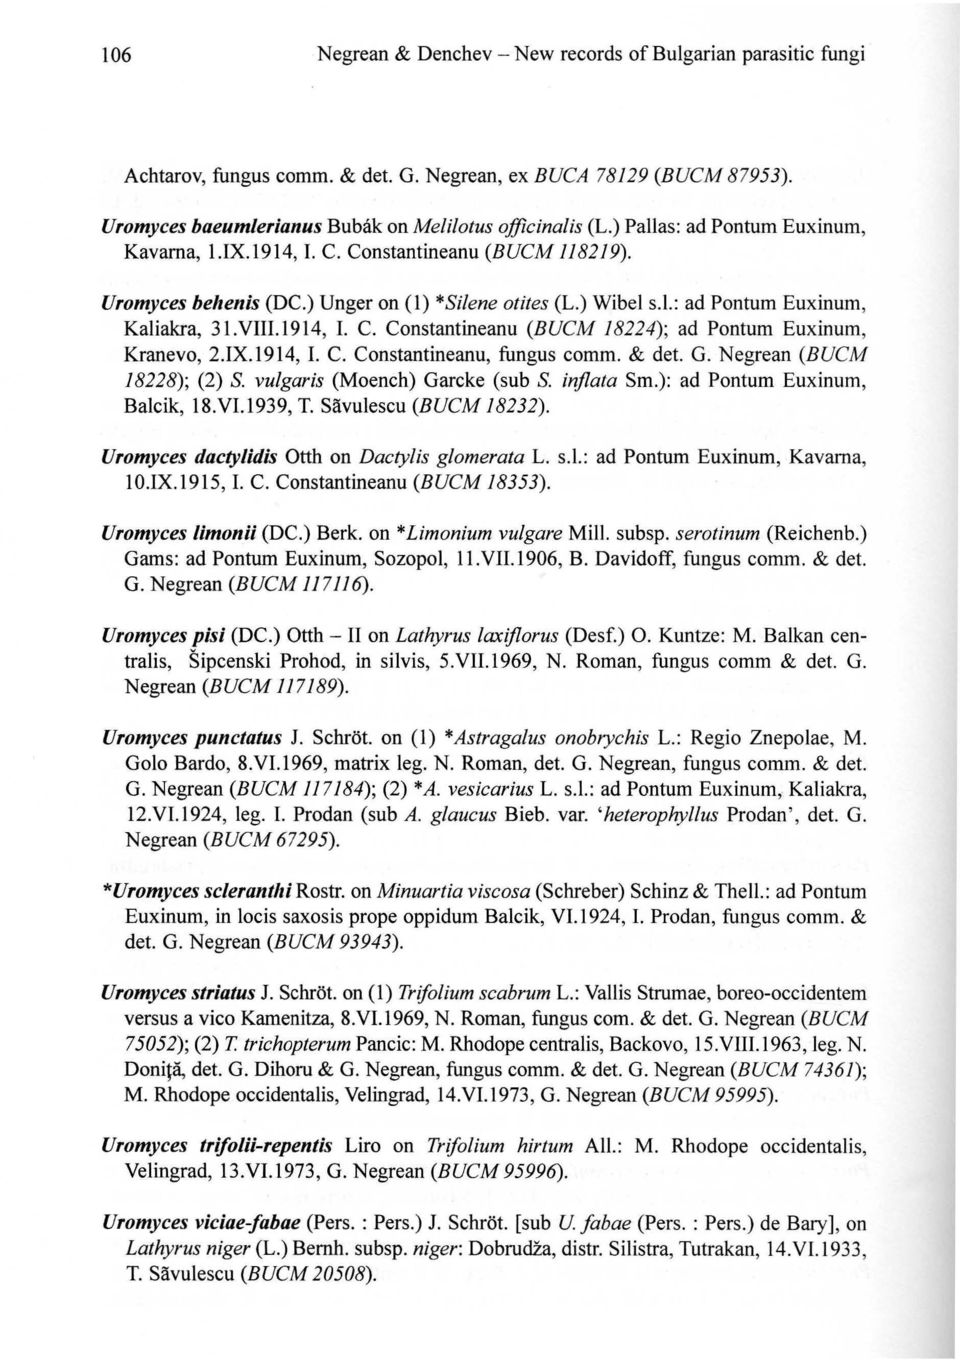 IX.1914, I. C. Constantineanu, fungus comm. & det. G. Negrean (BUCM 18228); (2) S. vulgaris (Moench) Garcke (sub S. injlata Sm.): ad Pontum Euxinum, Balcik, 18.VI.l939, T. Savulescu (BUCM 18232).